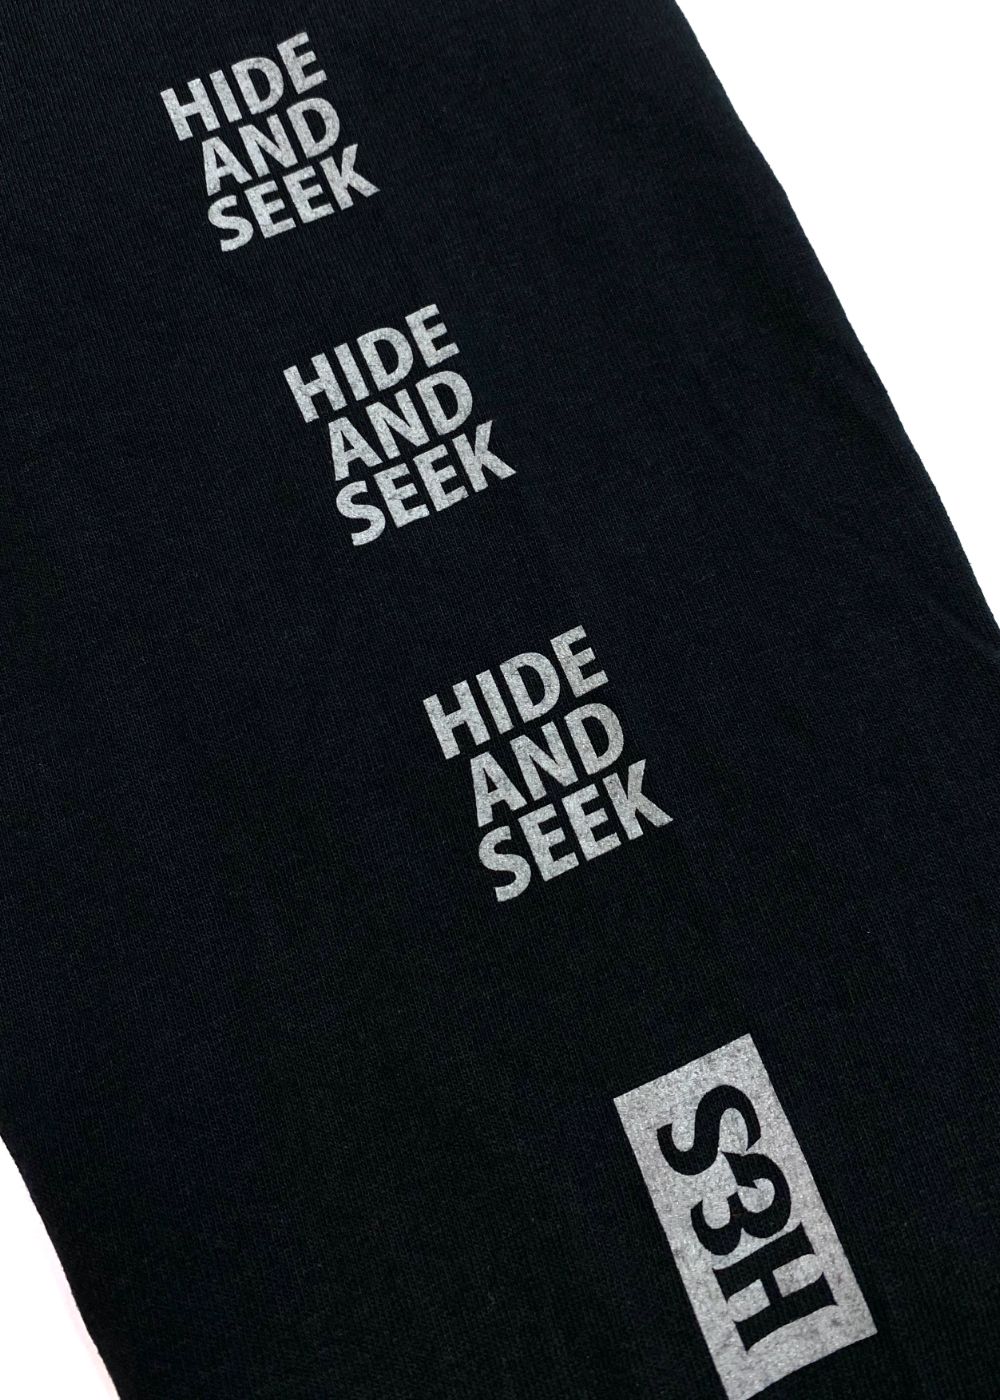 HIDE AND SEEK - TEAM FAR EAST L/S TEE (BLACK) / マルチロゴ ロング